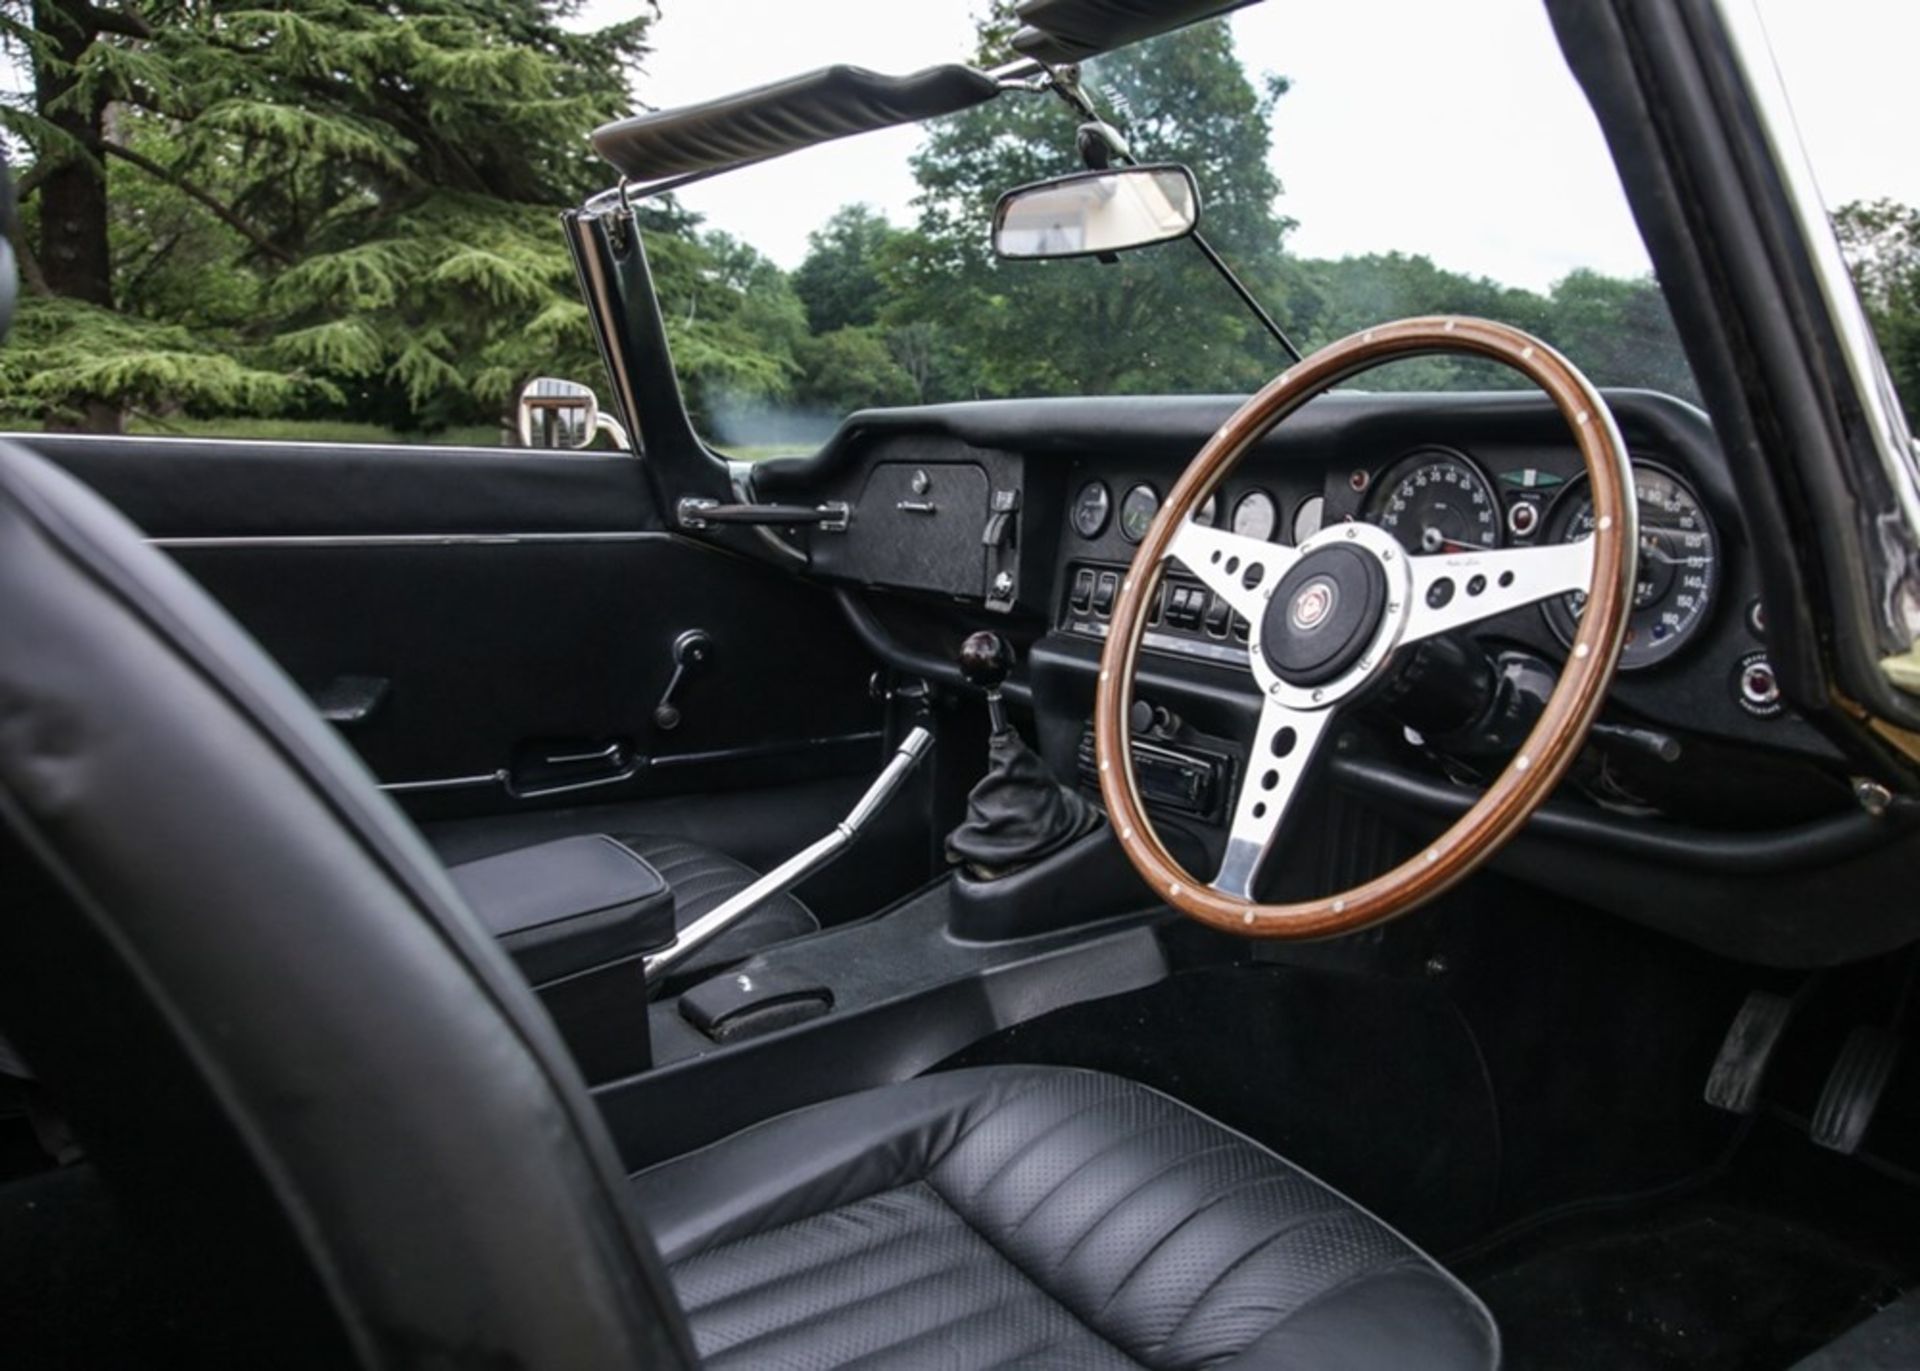 1972 Jaguar E-Type Series III Roadster - Image 8 of 9